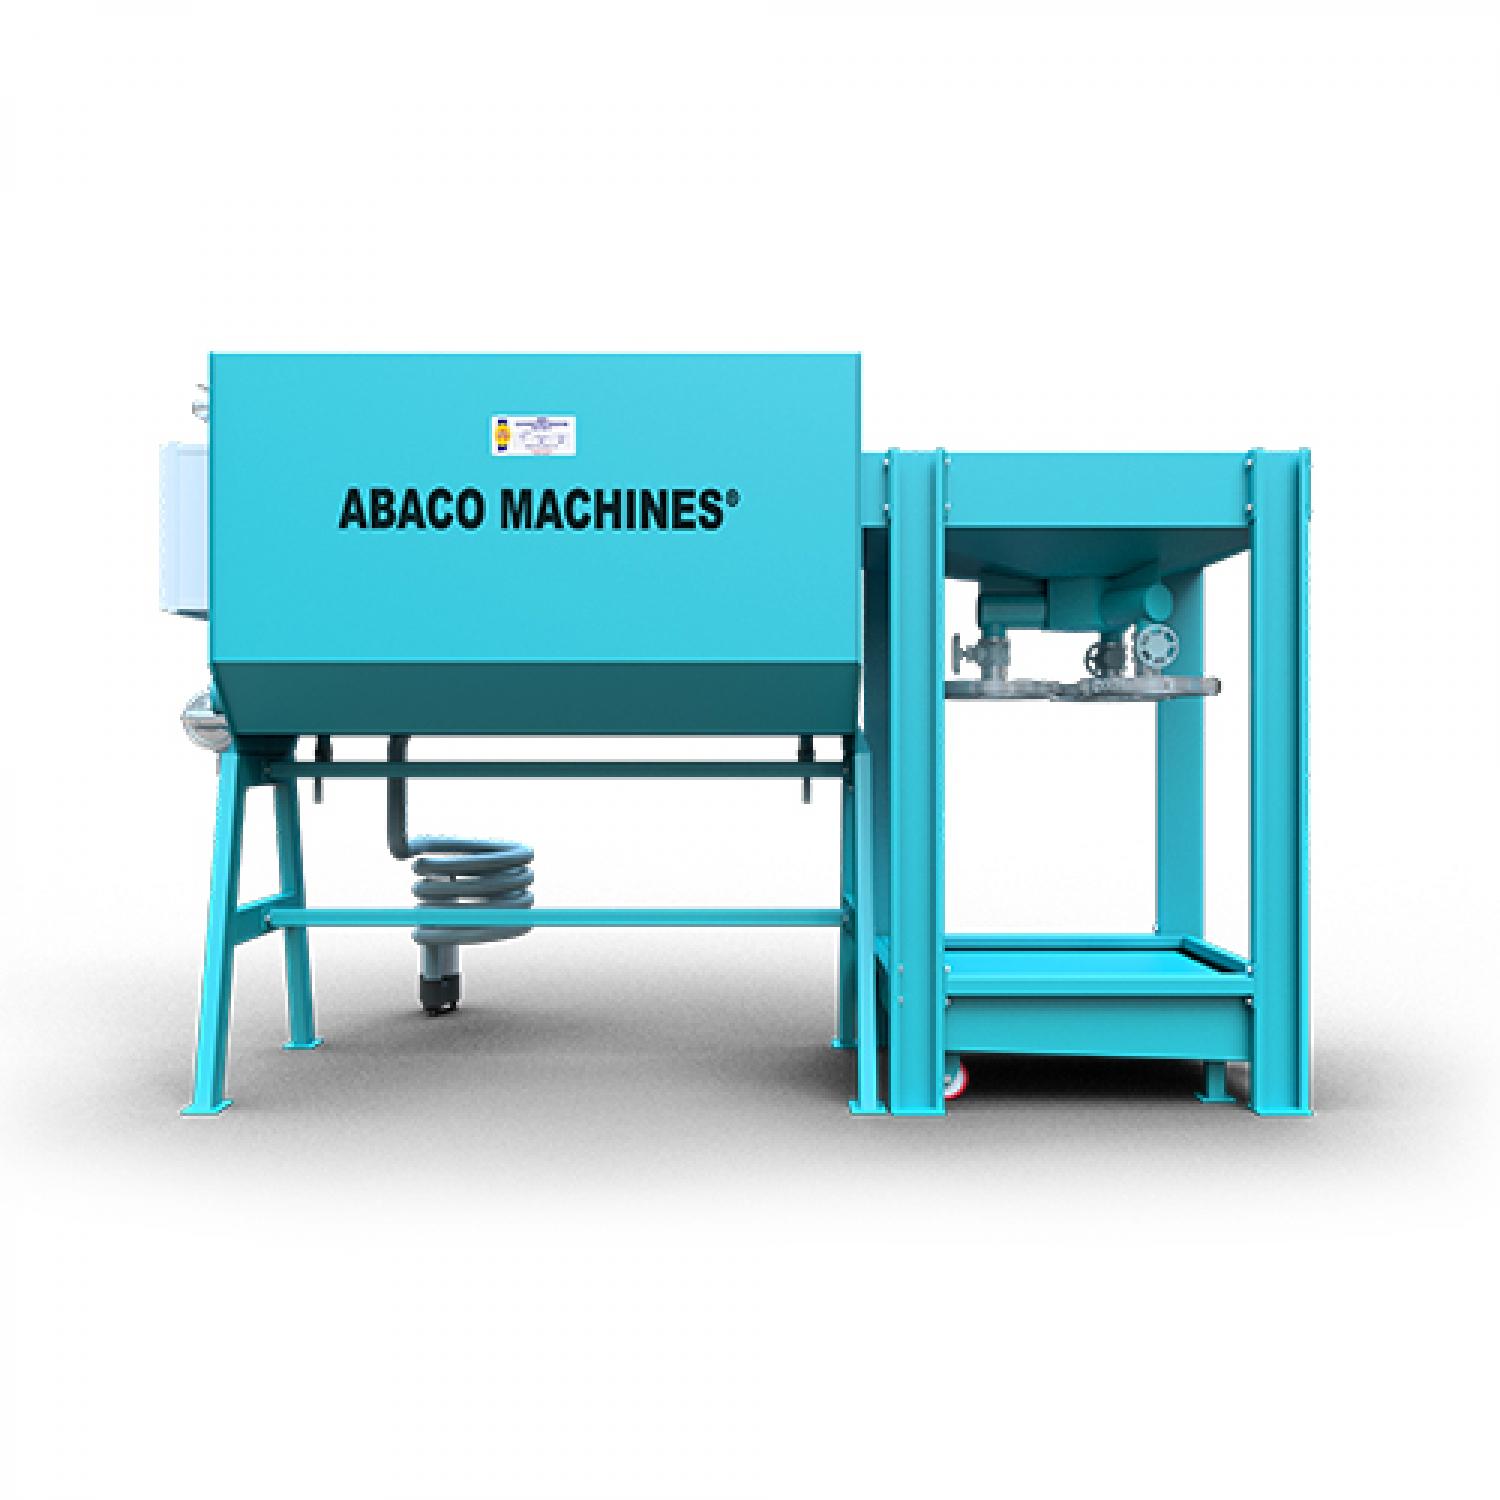 ABACO SLUDGE DEHYDRATOR MACHINE - ASDM114